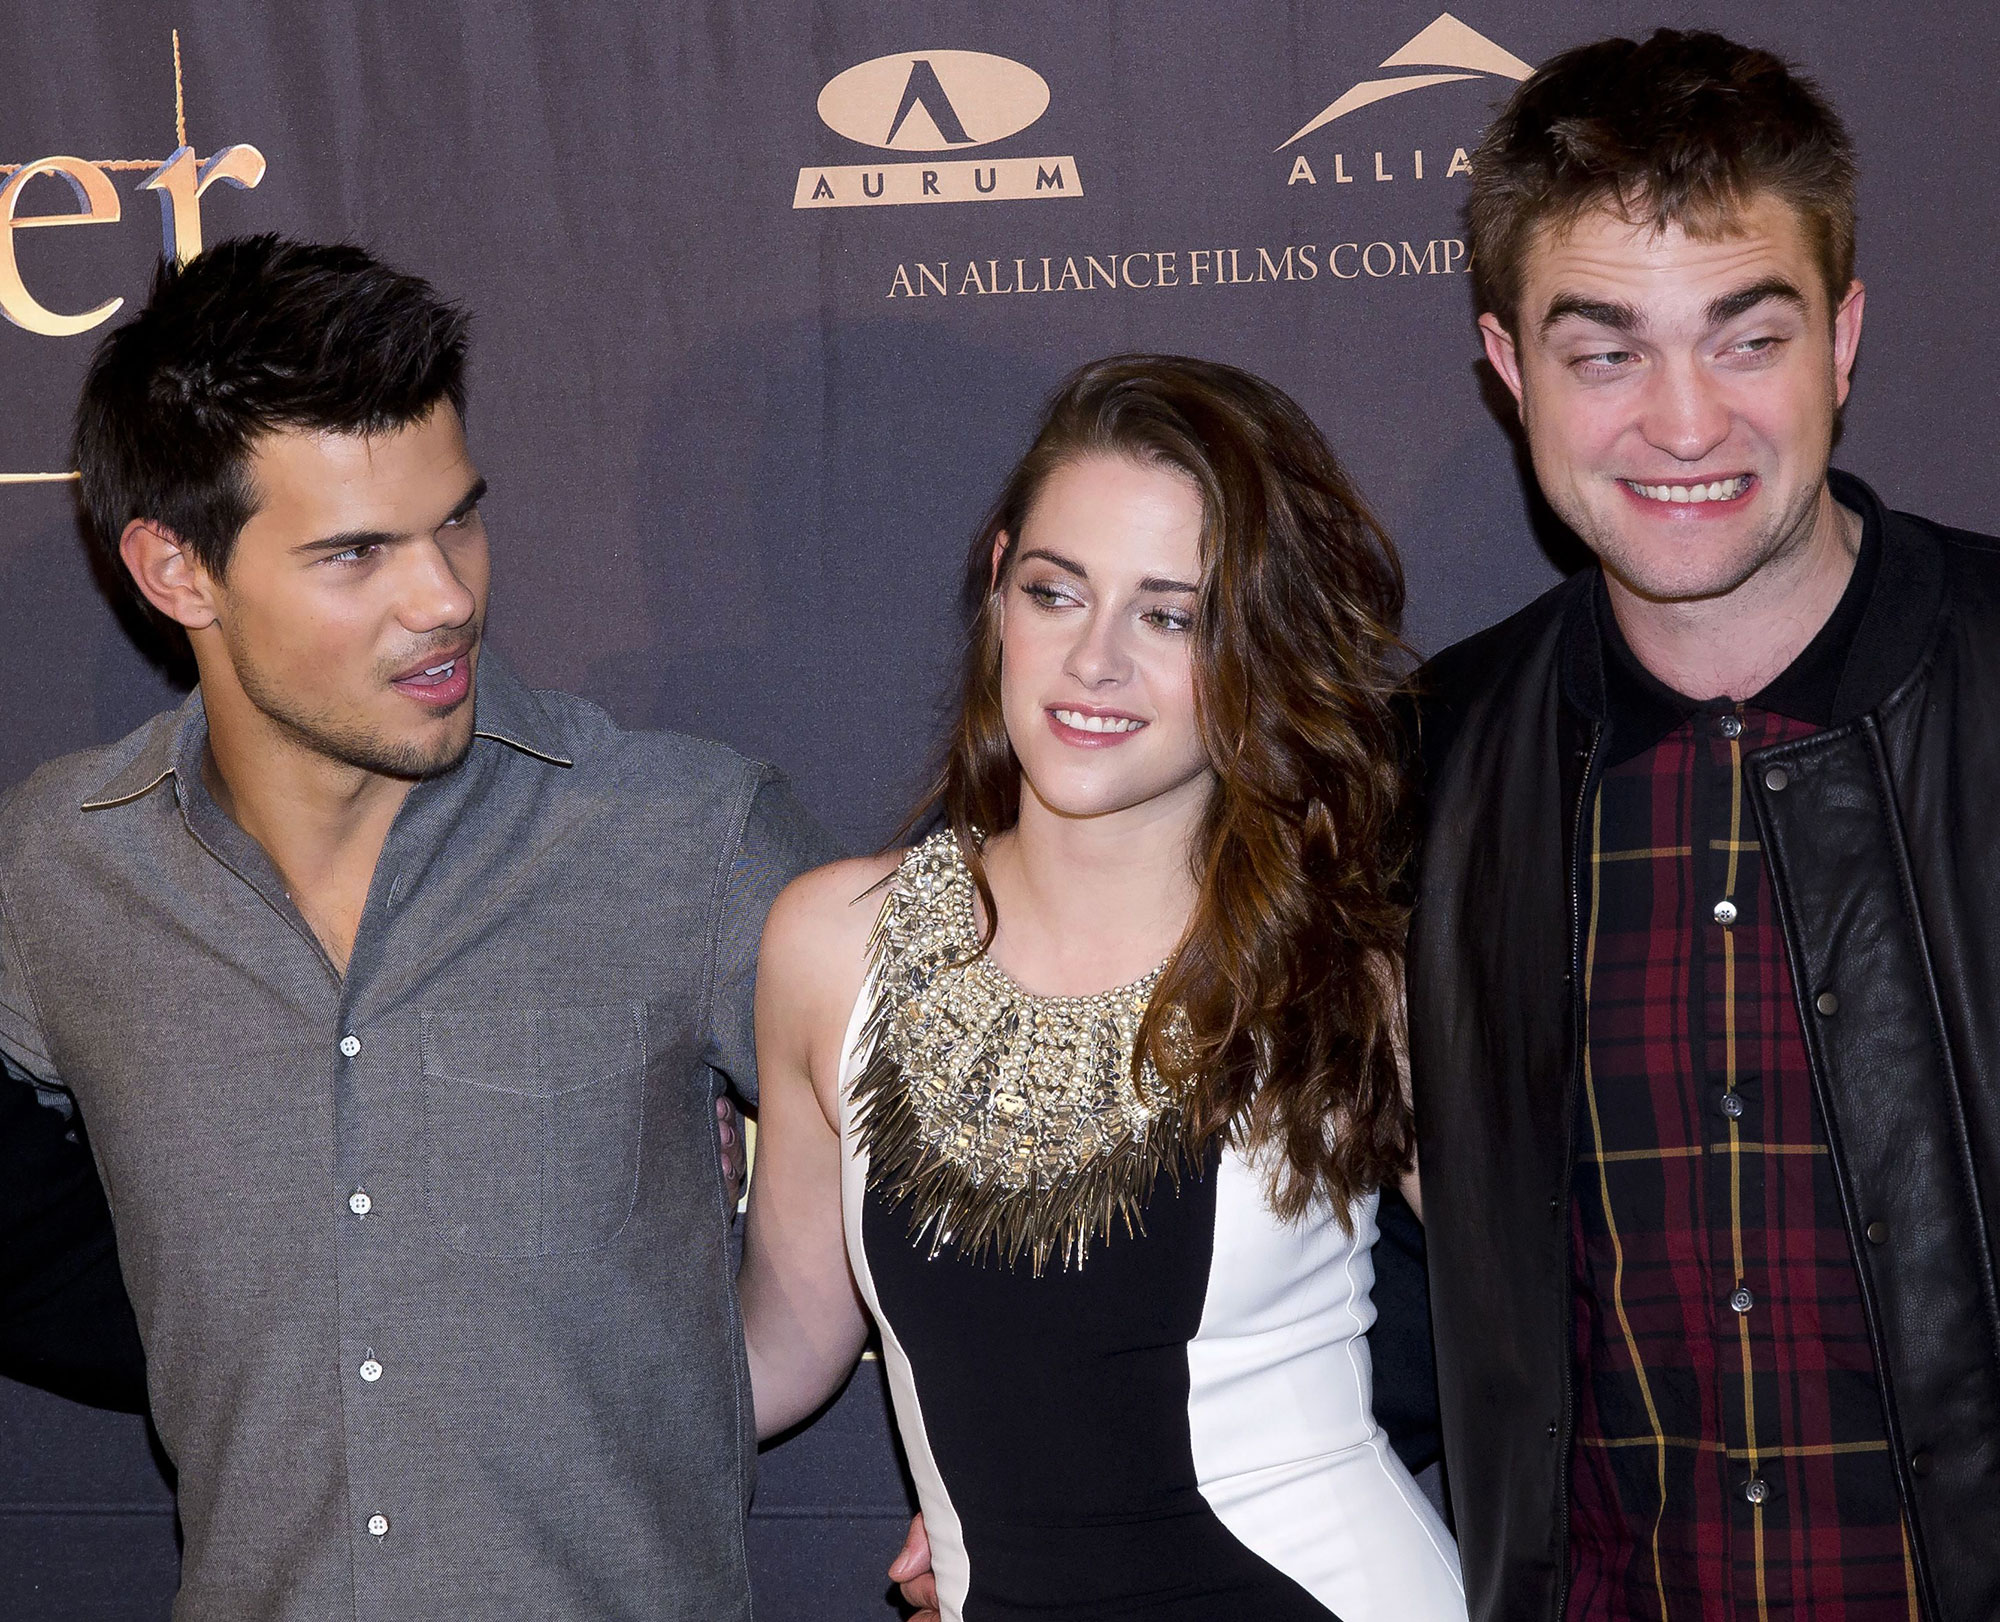 Agnes Gray Jurassic Park adelig Taylor Lautner Reflects on Robert Pattinson 'Twilight' Rivalry